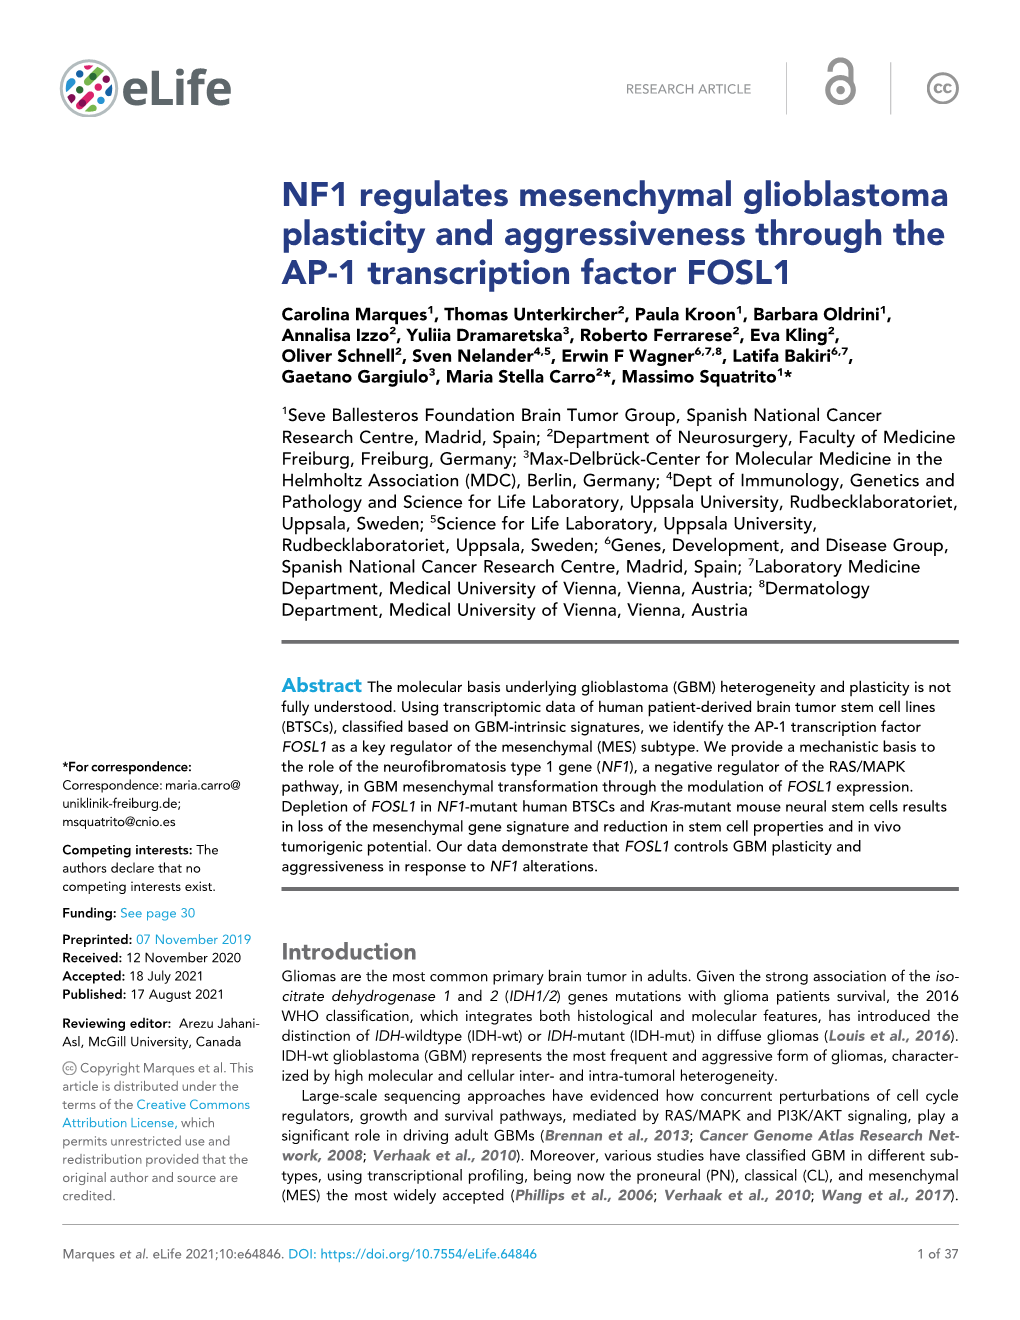 NF1 Regulates Mesenchymal Glioblastoma Plasticity And